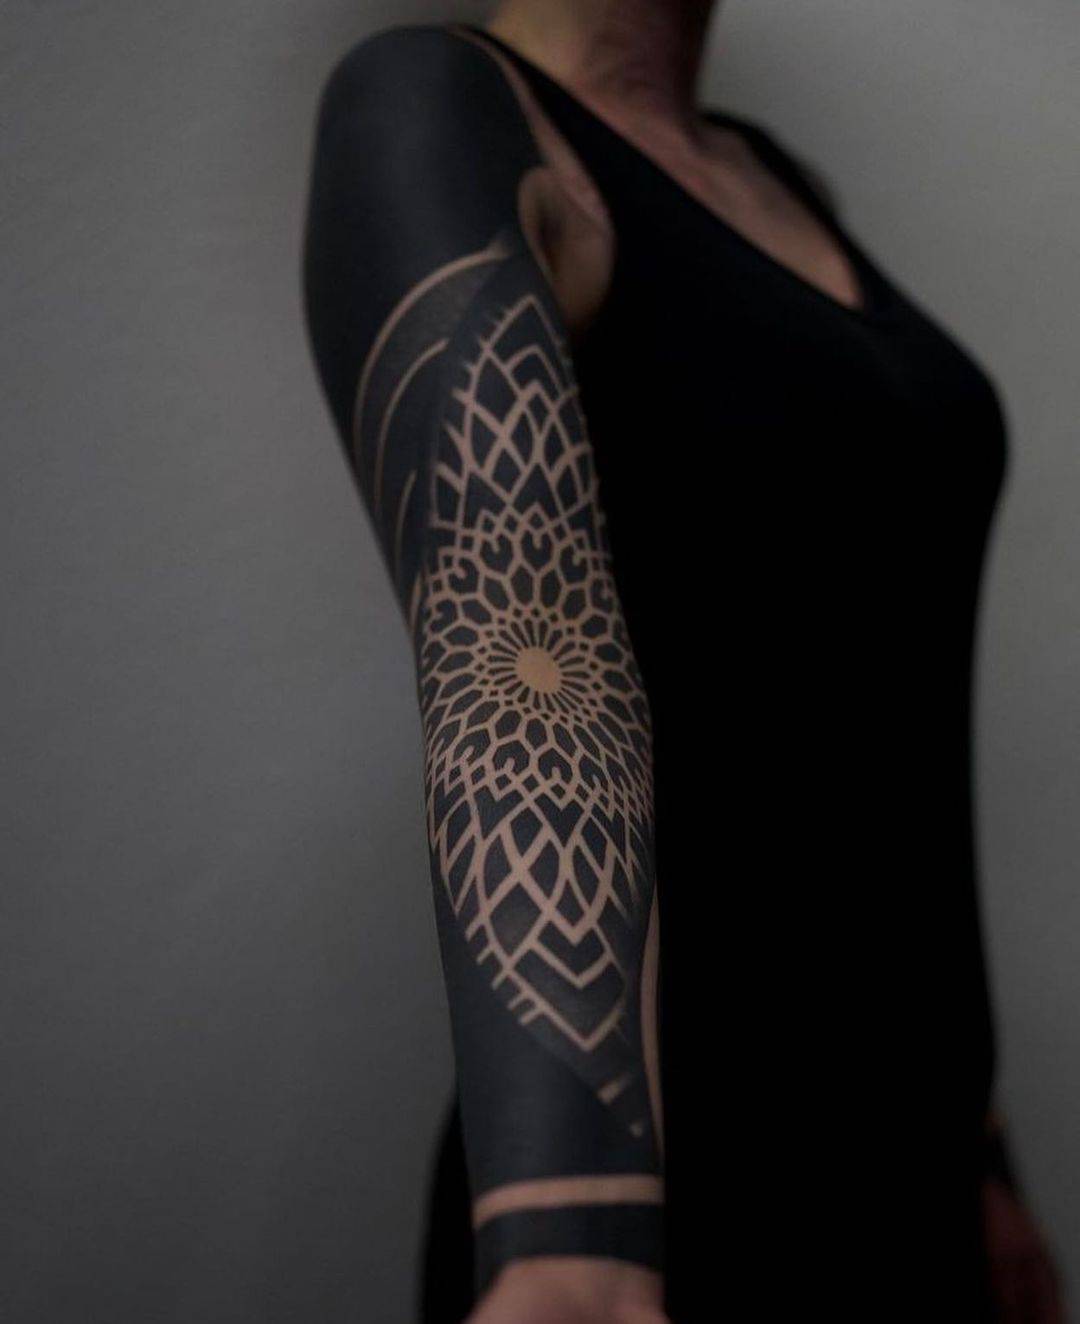 Mandala tattoo by blackwork company